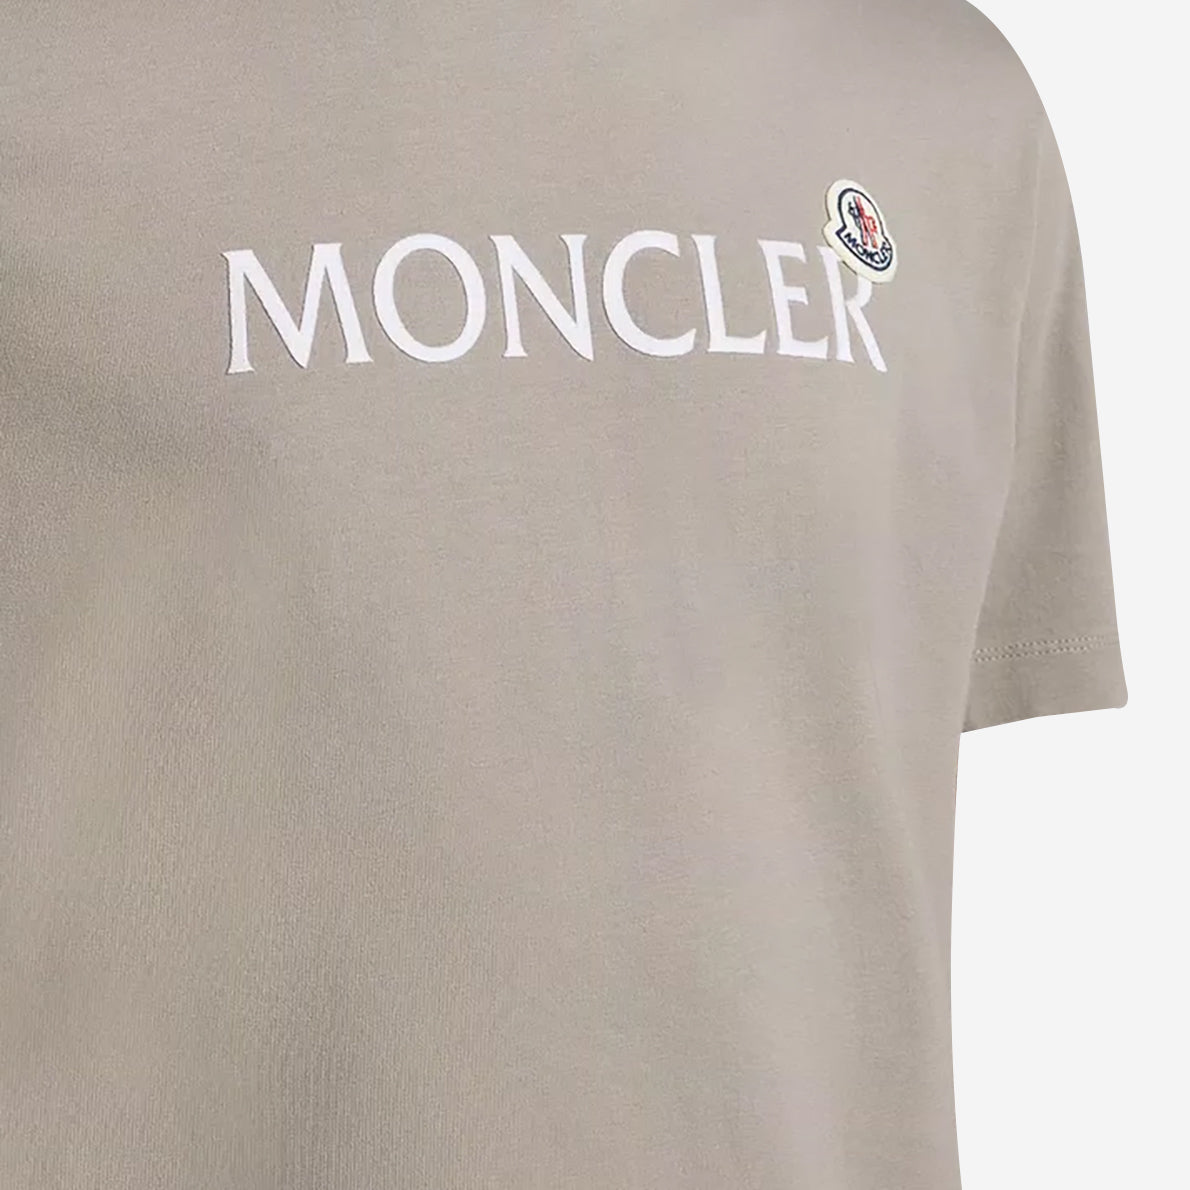 Moncler Logo And Badge T-Shirt